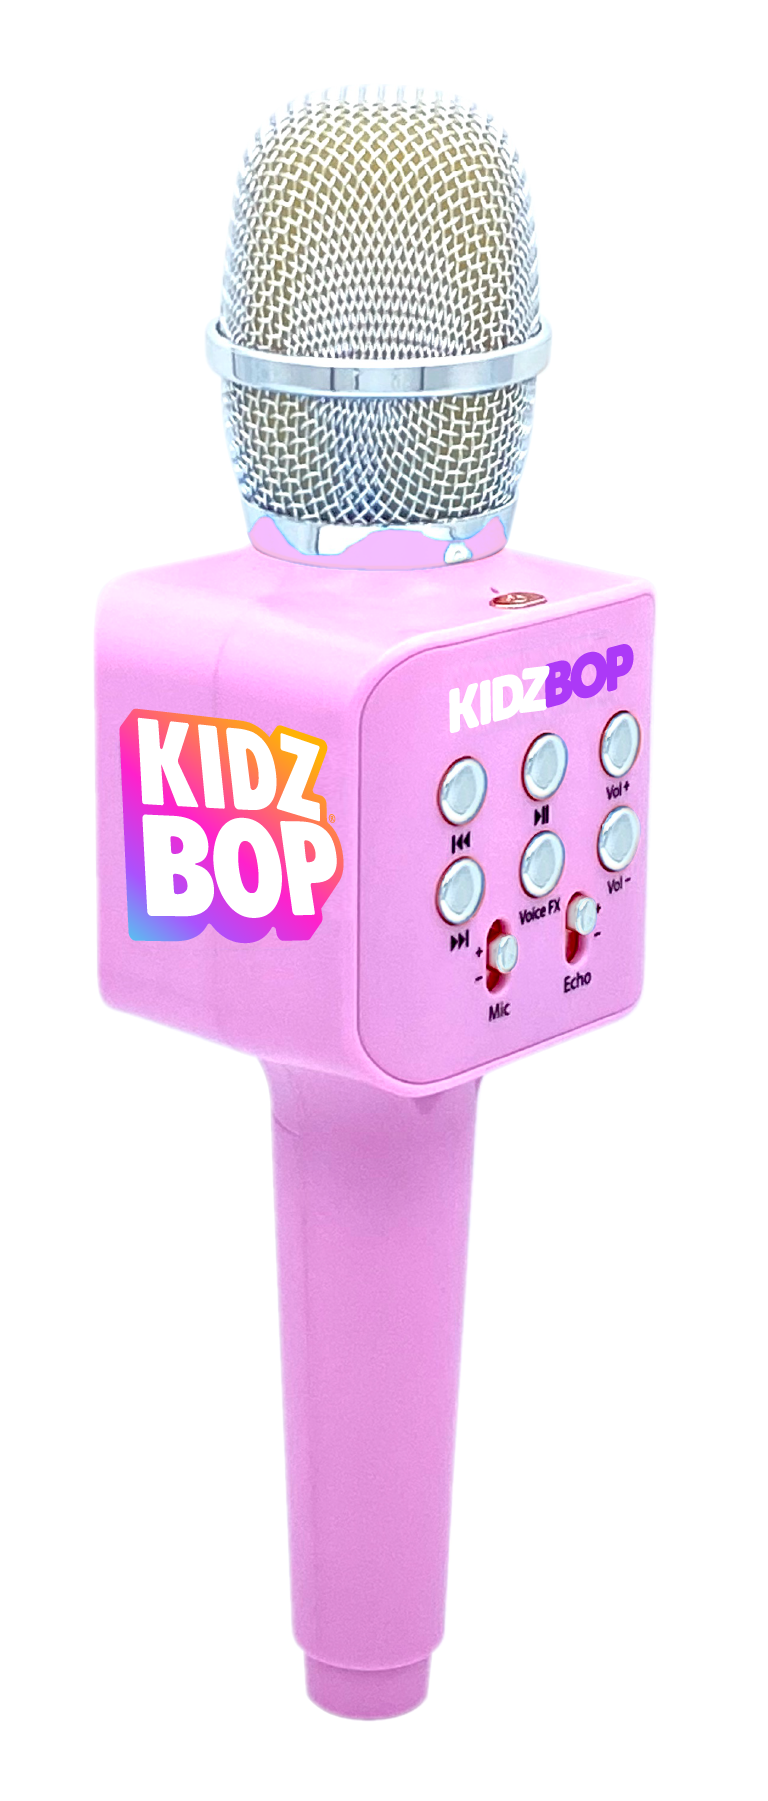 Move2Play Kidz Bop Karaoke Microphone Gift, The Hit Music Brand